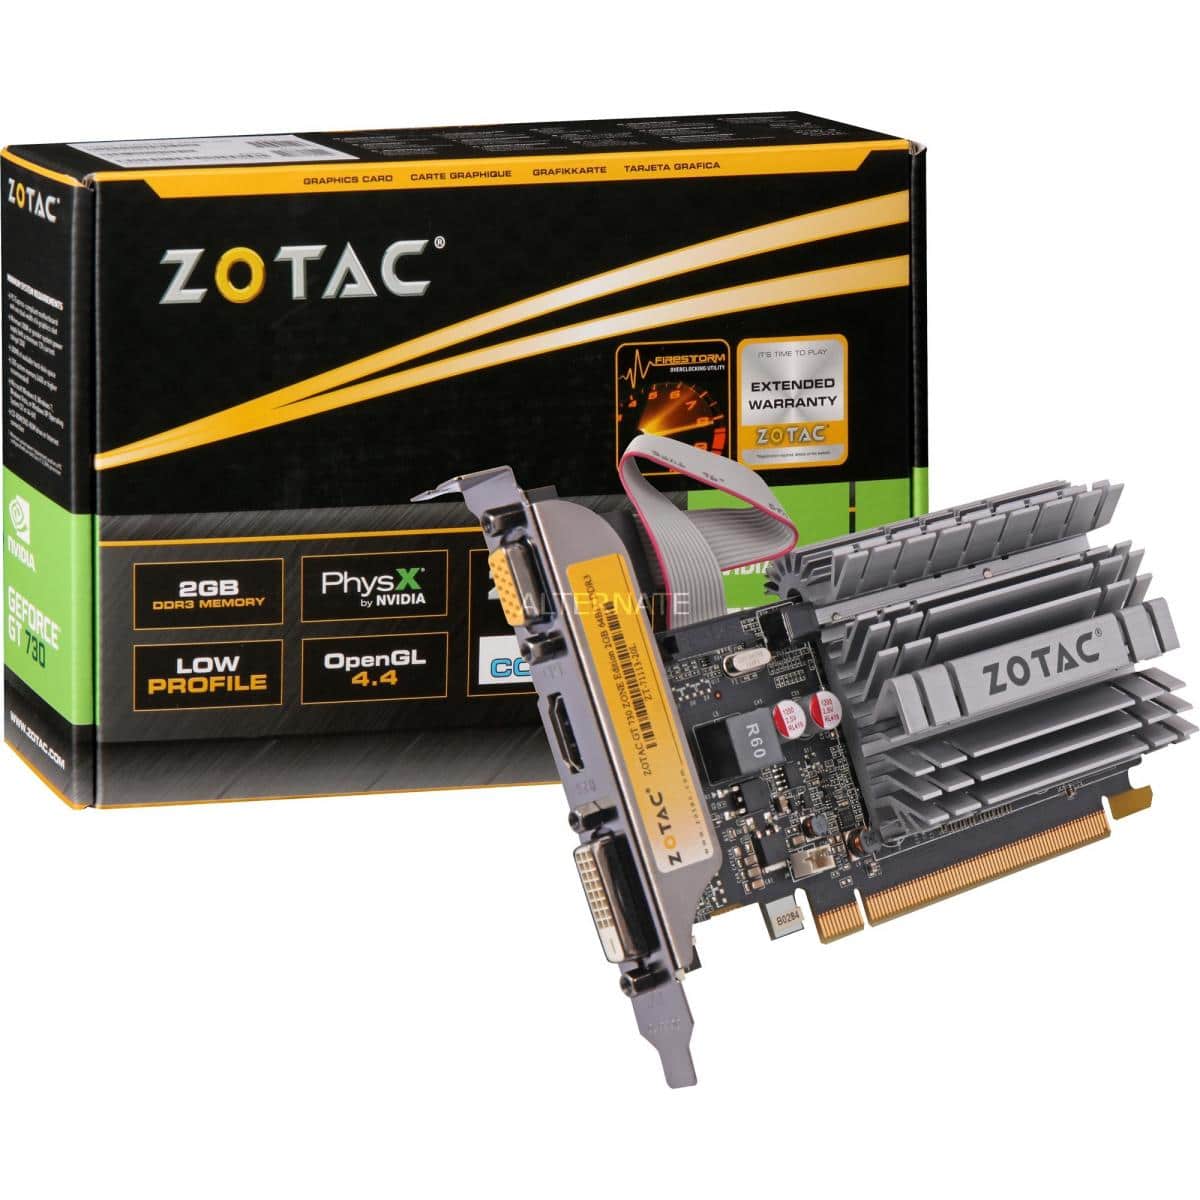 Zotac Geforce GT 730 4GB DDR3 Graphics Card